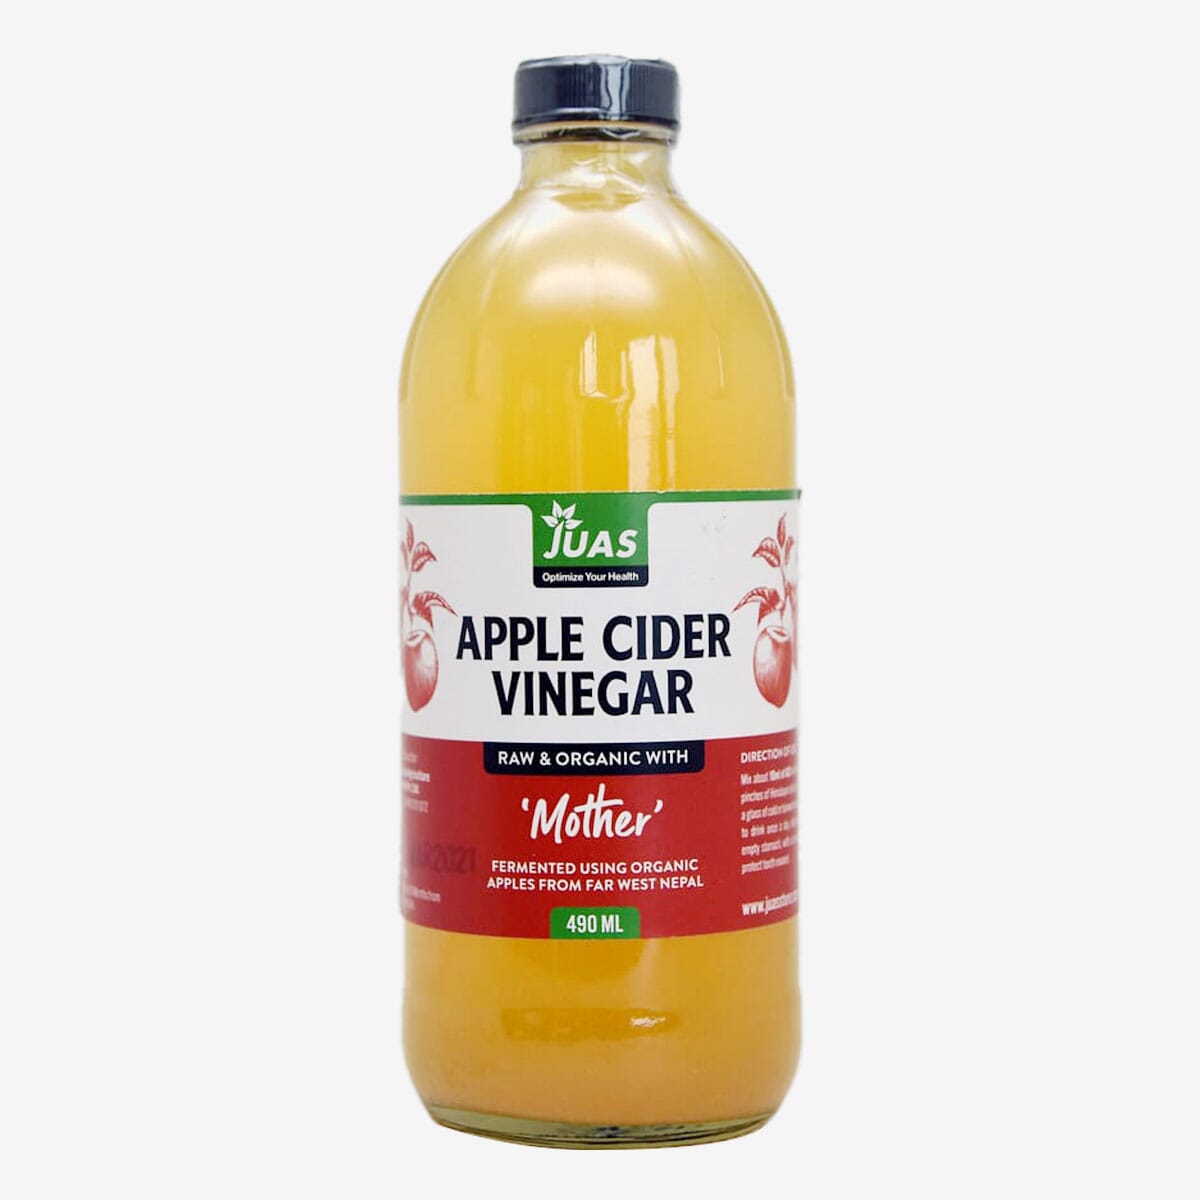 JUAS Raw Apple Cider Vinegar with Mother